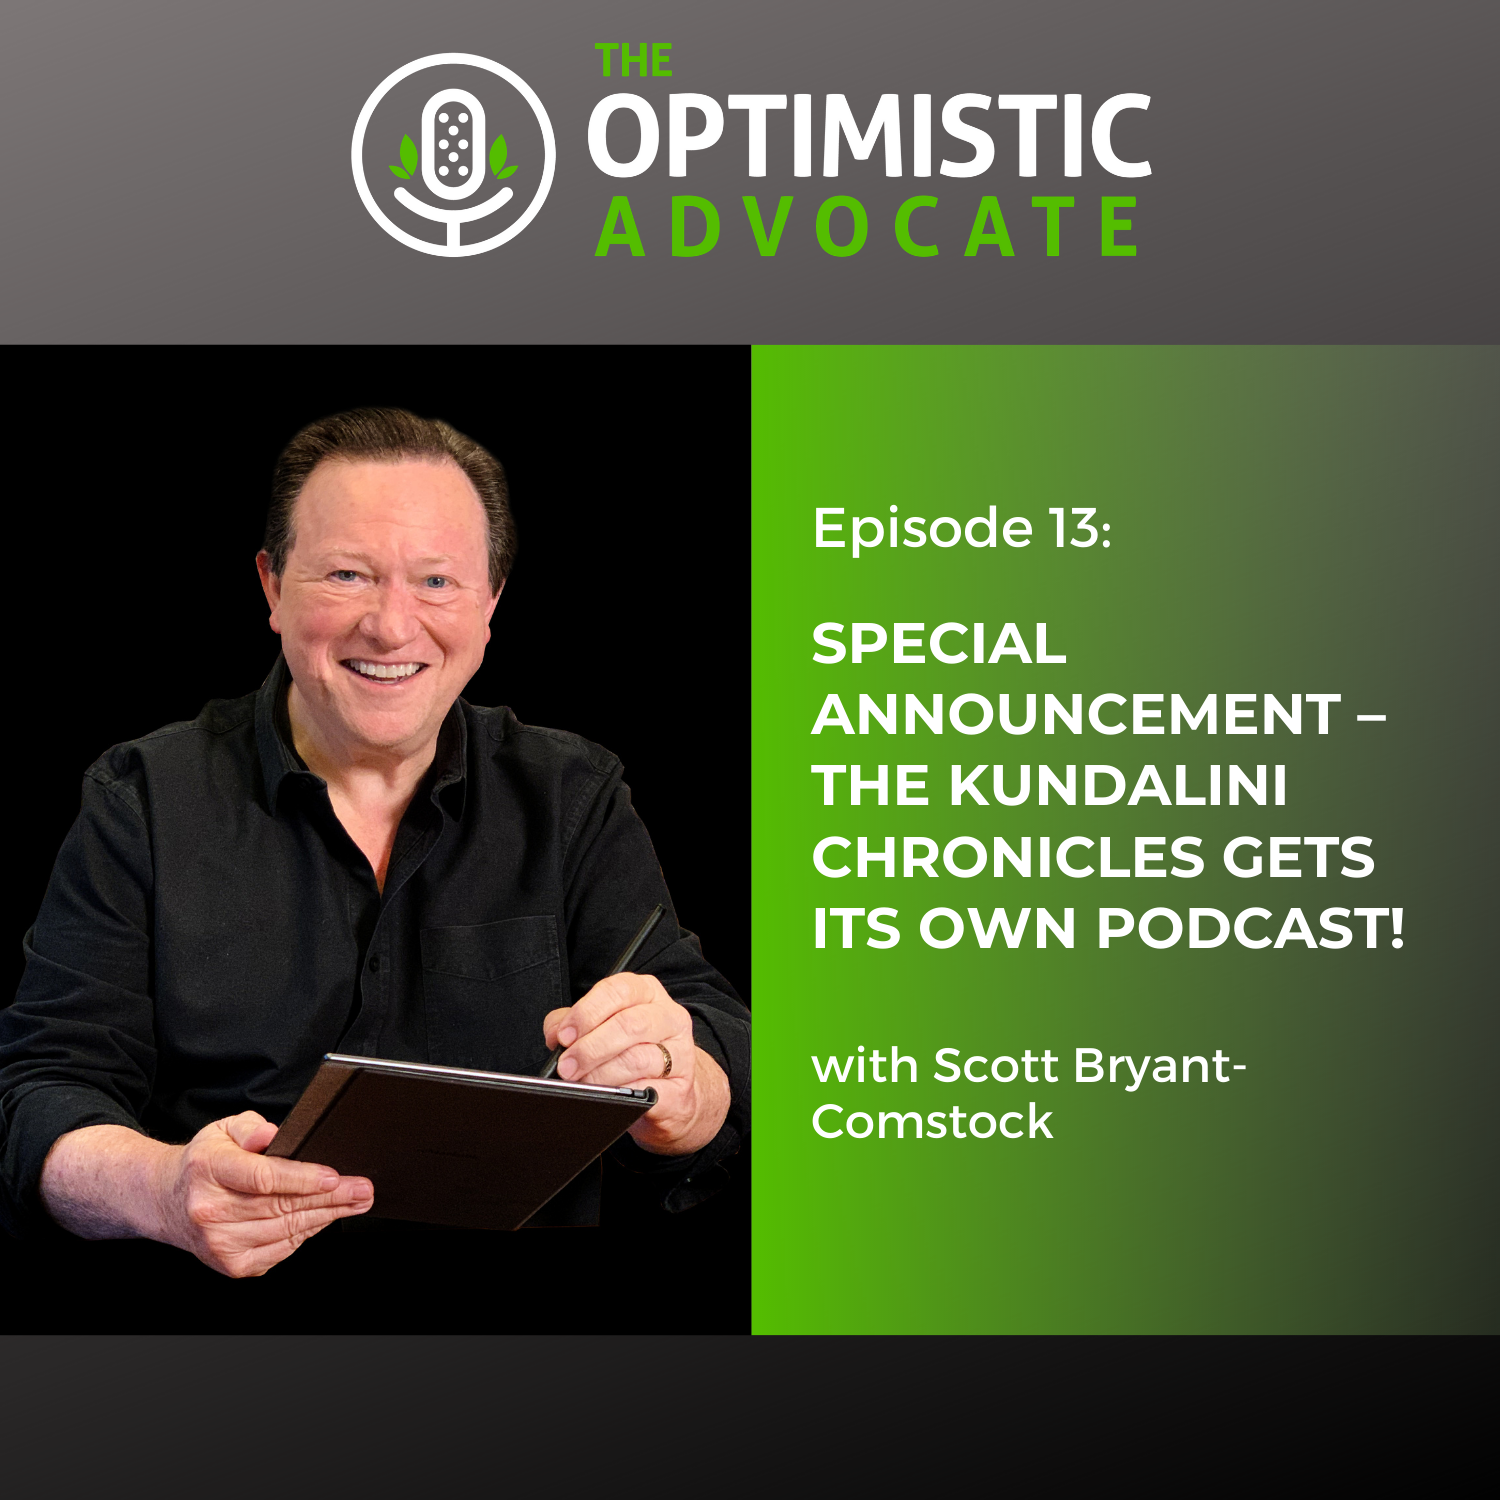 Artwork for podcast The Optimistic Advocate